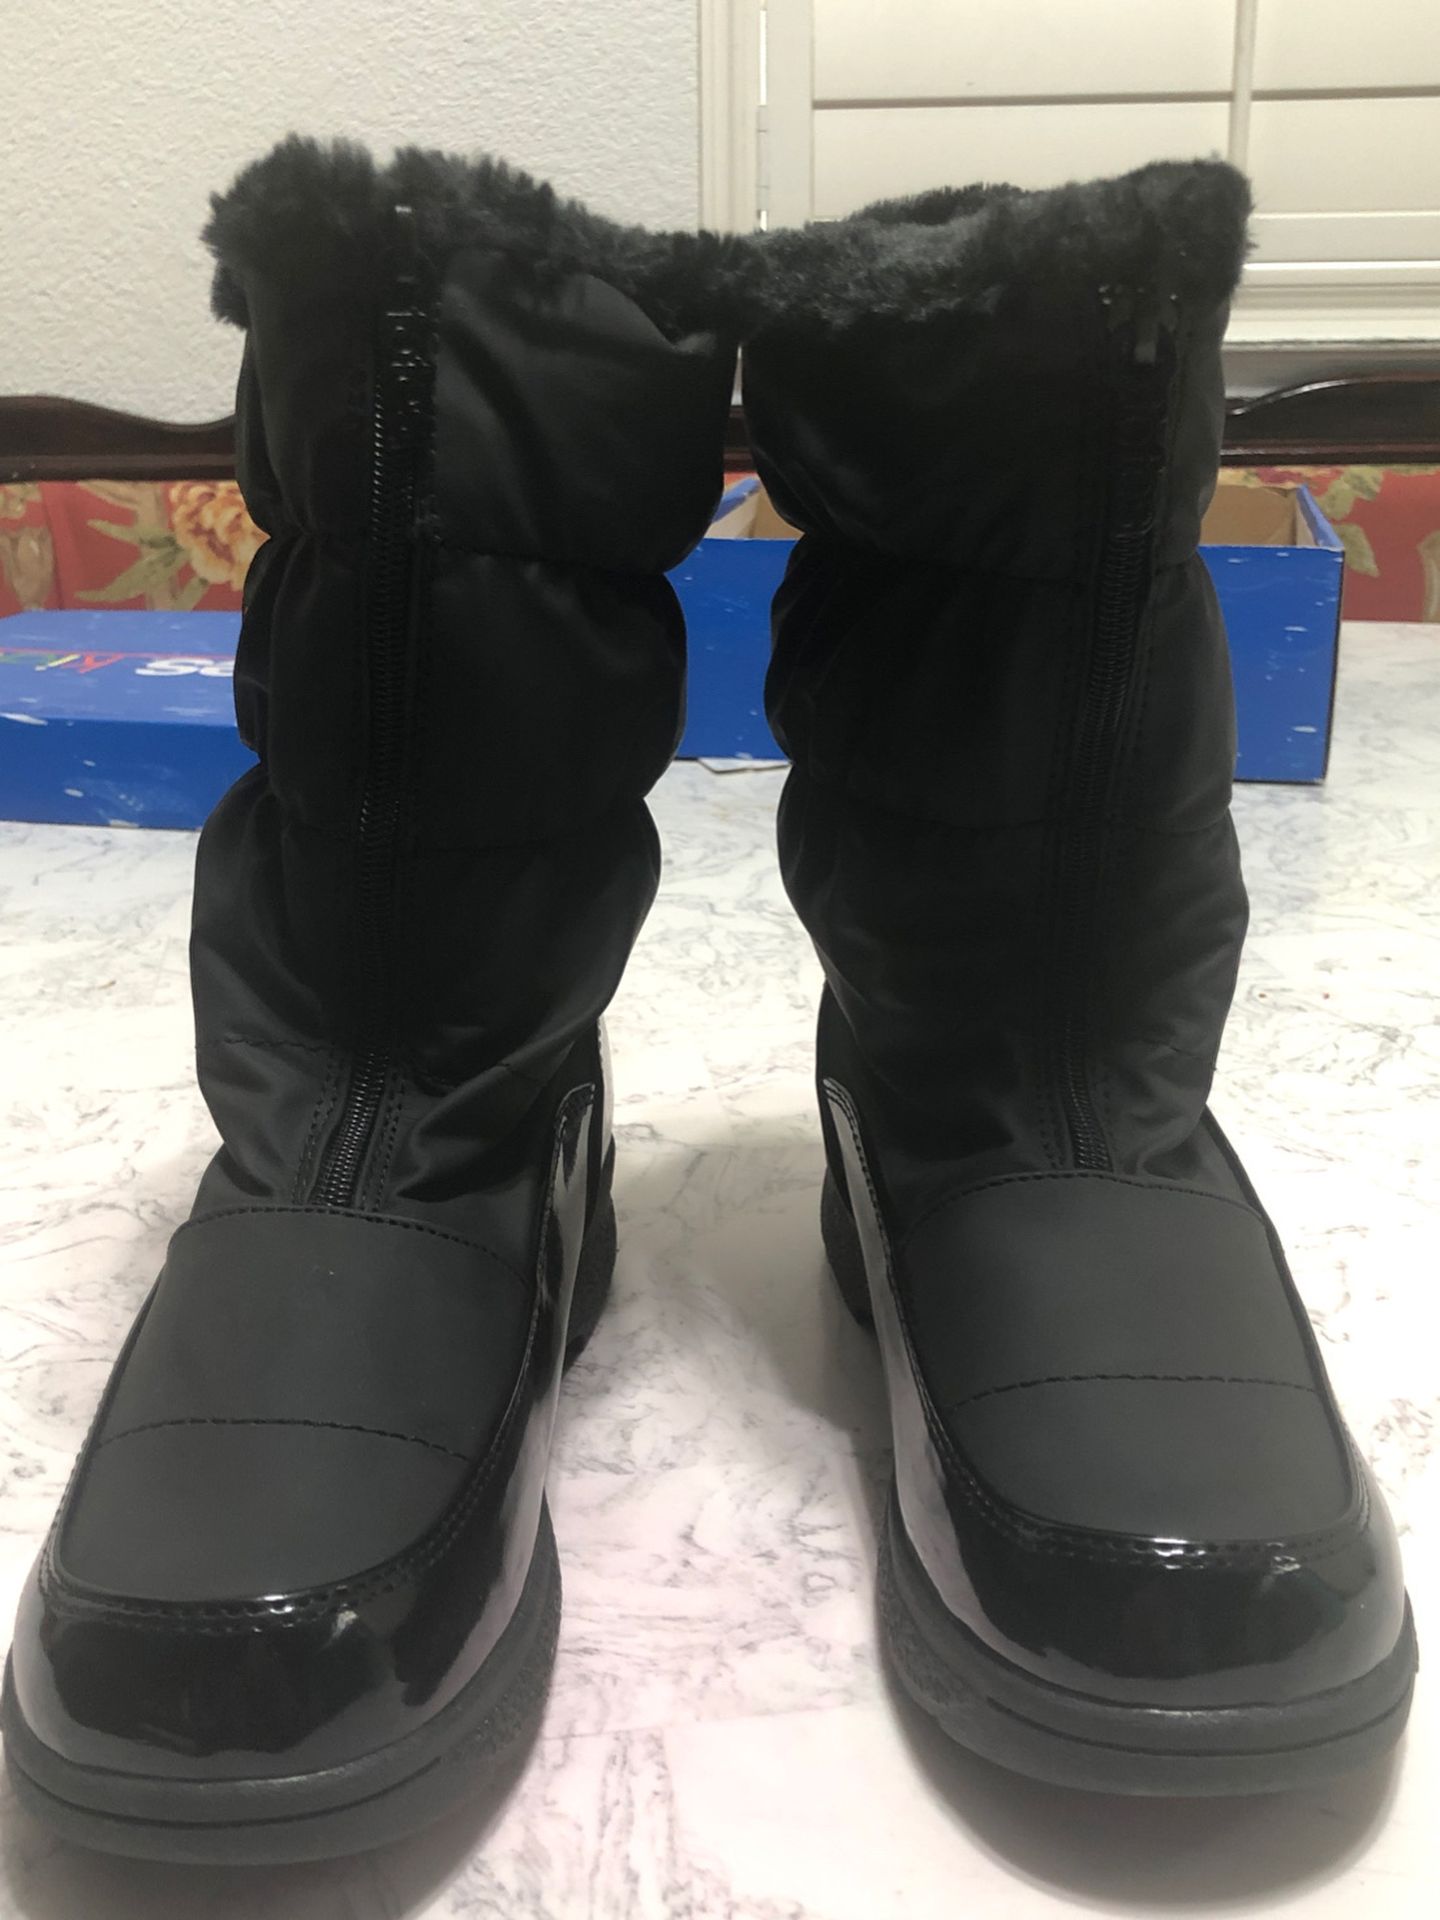 Boots, girls size 4- shiny new!